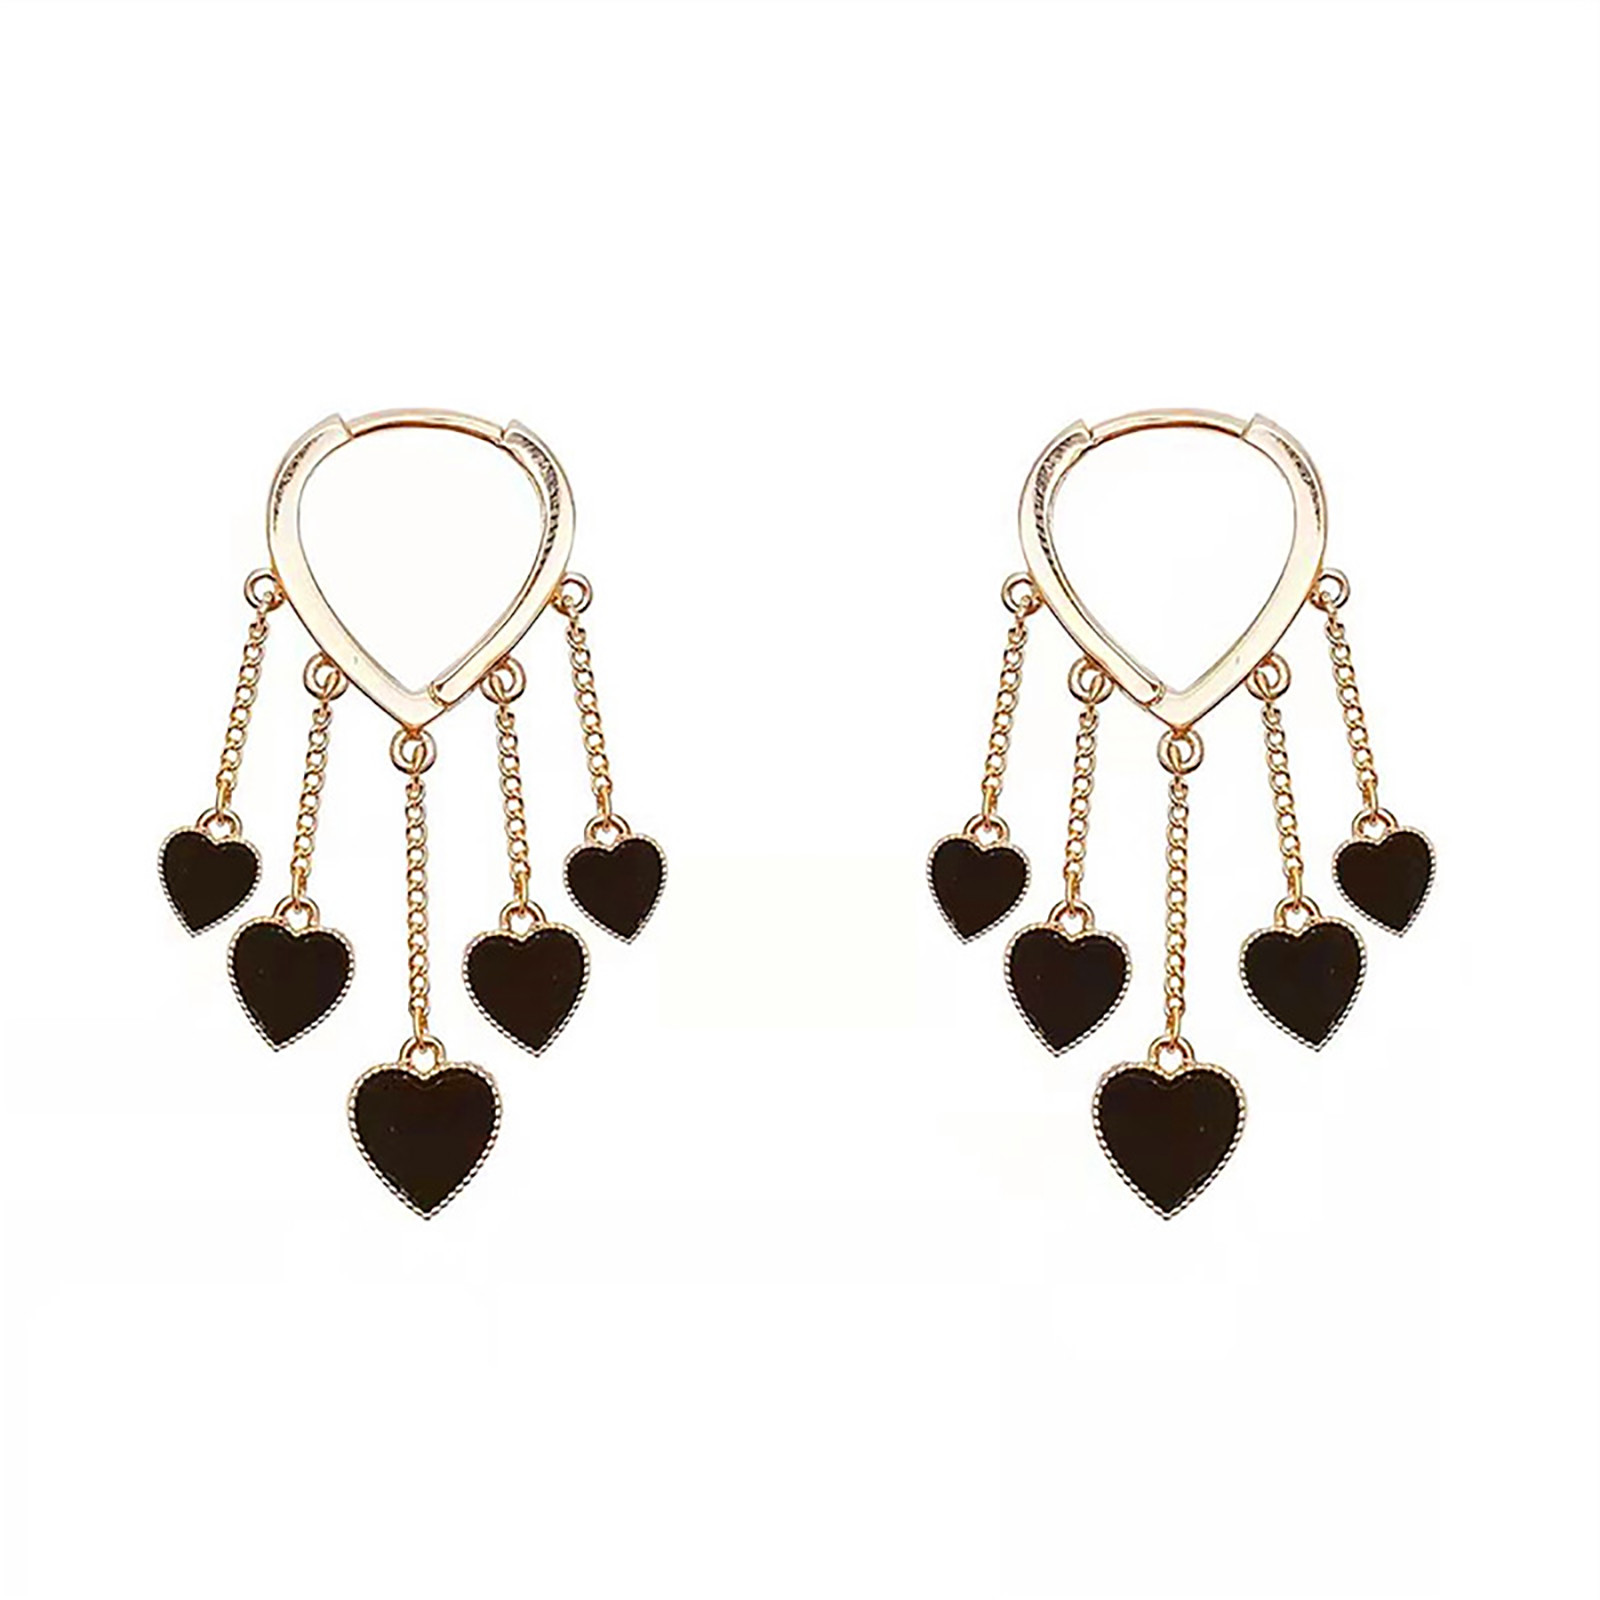 Apmemiss Wholesale Black Long Tassel Earrings,Long Love Shaped Tassel Earrings - image 1 of 1